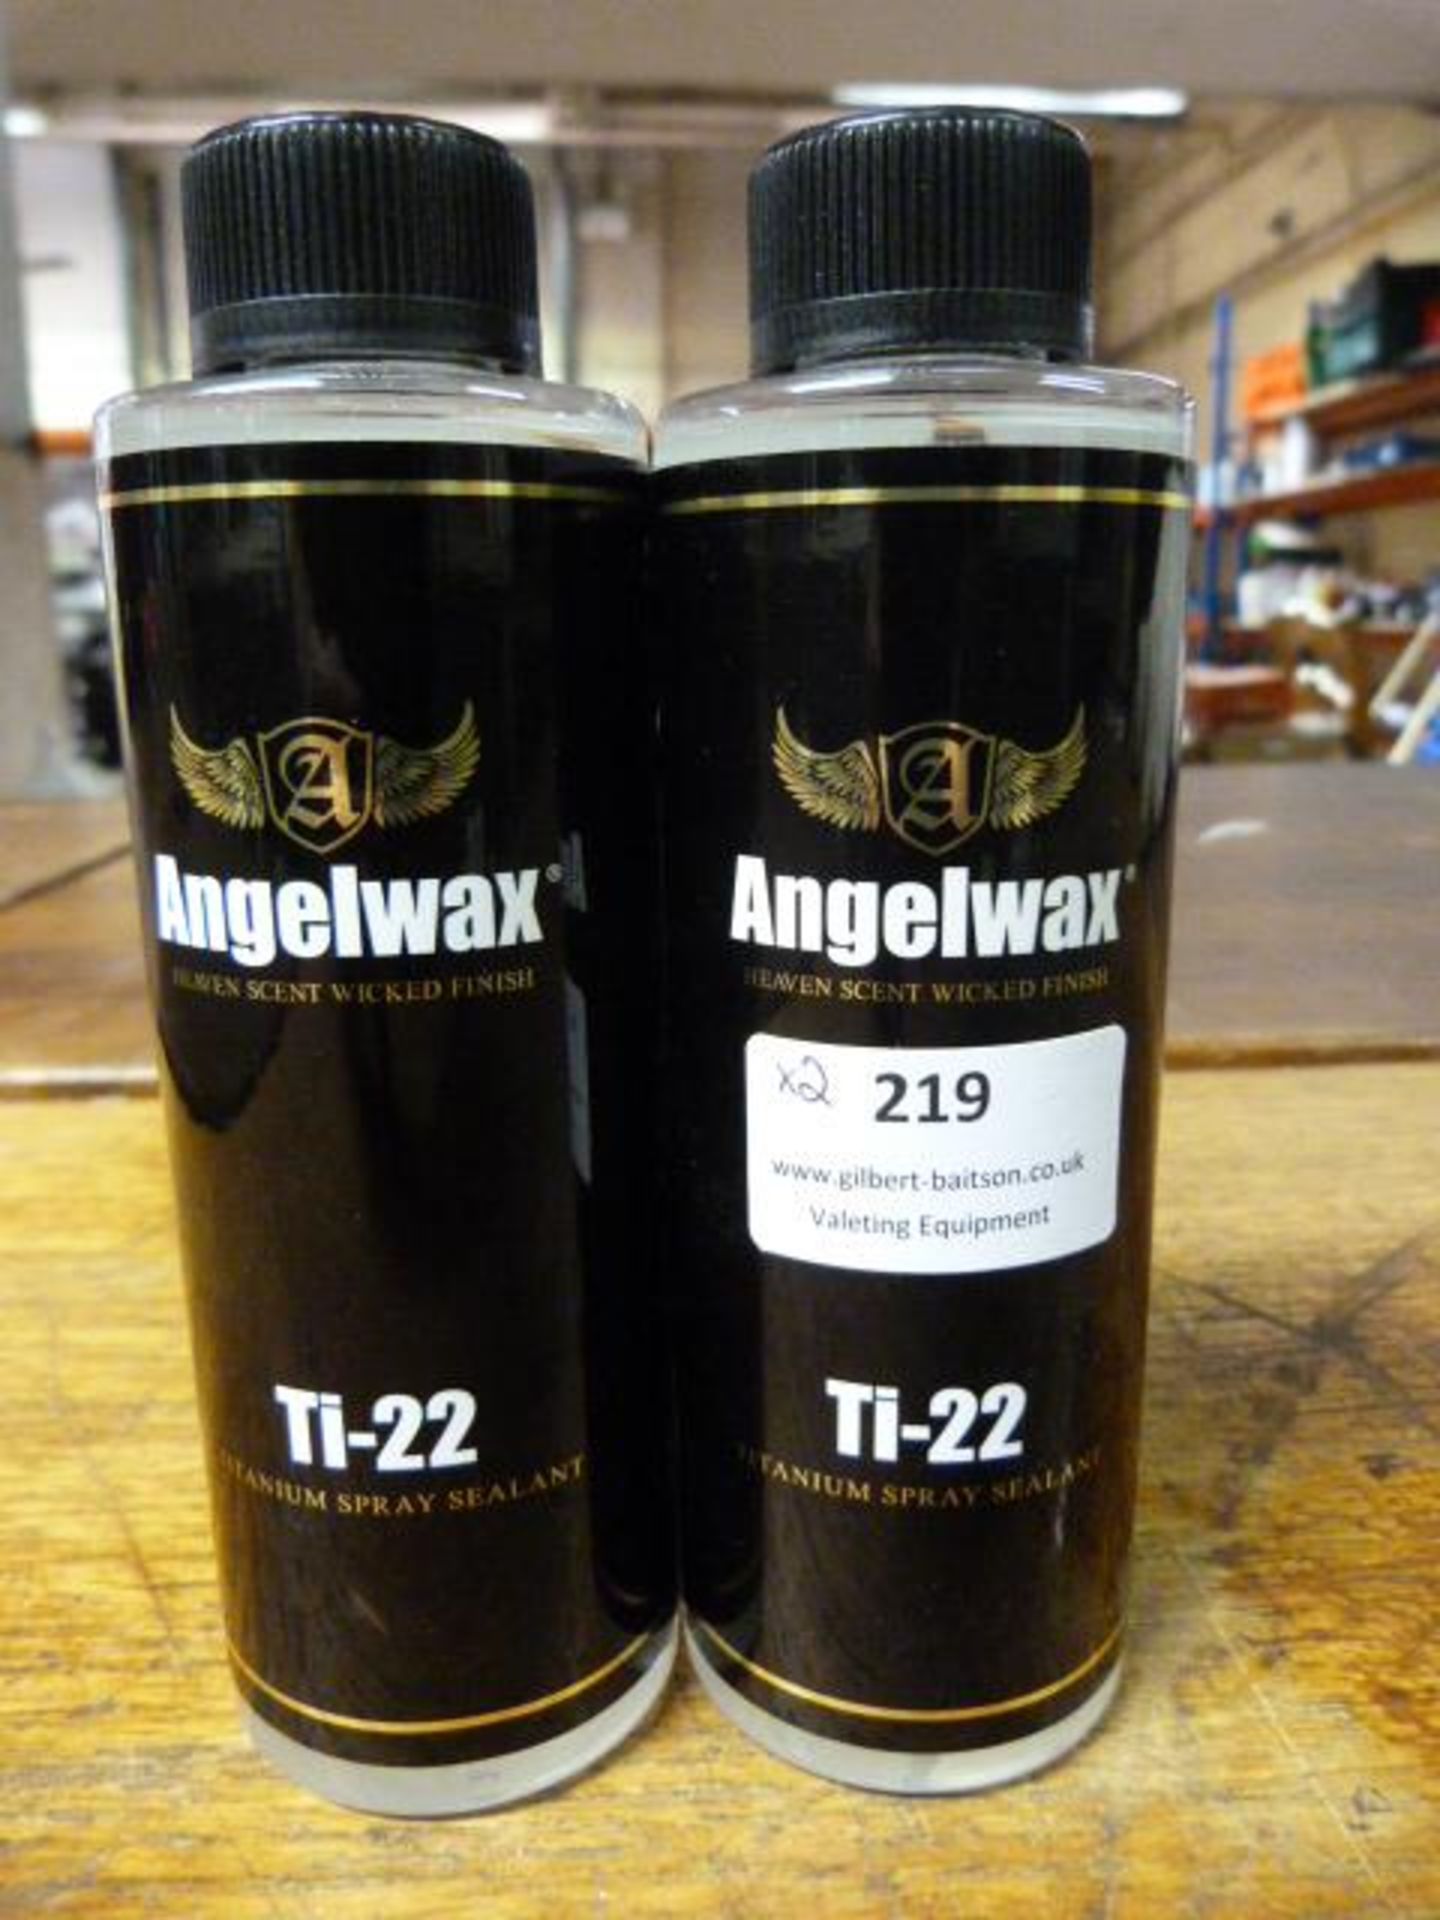 *2x 250ml of Angel Wax Ti22 Titanium Spray Sealant